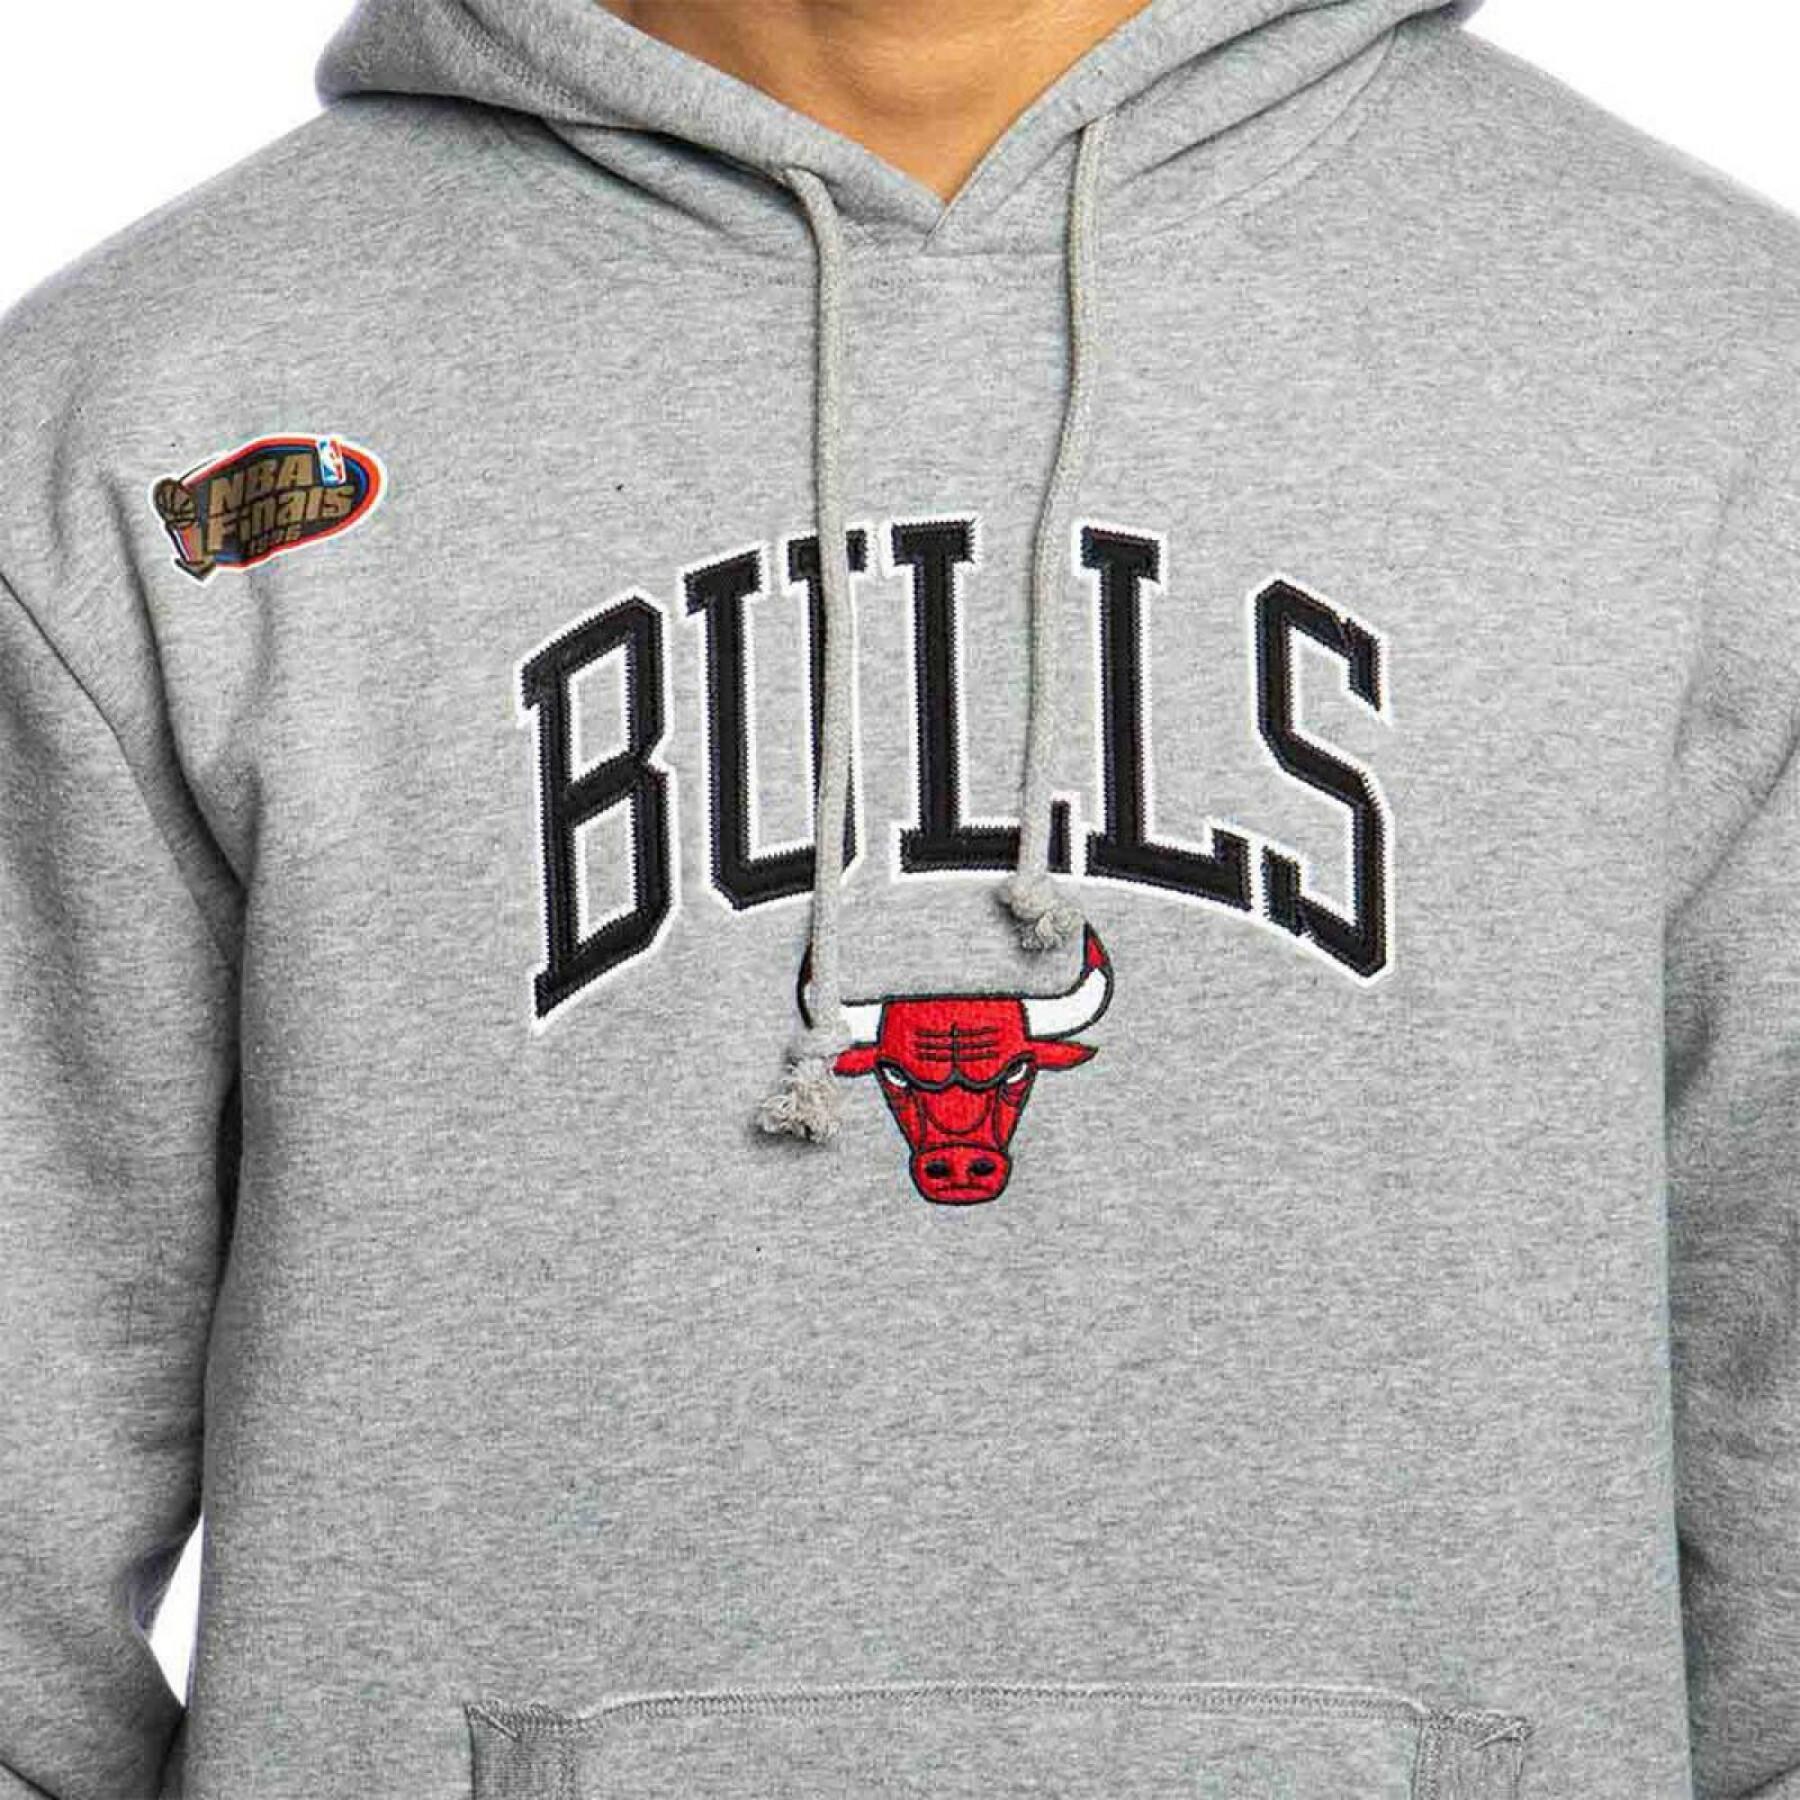 Arch huvtröja Chicago Bulls 2021/22